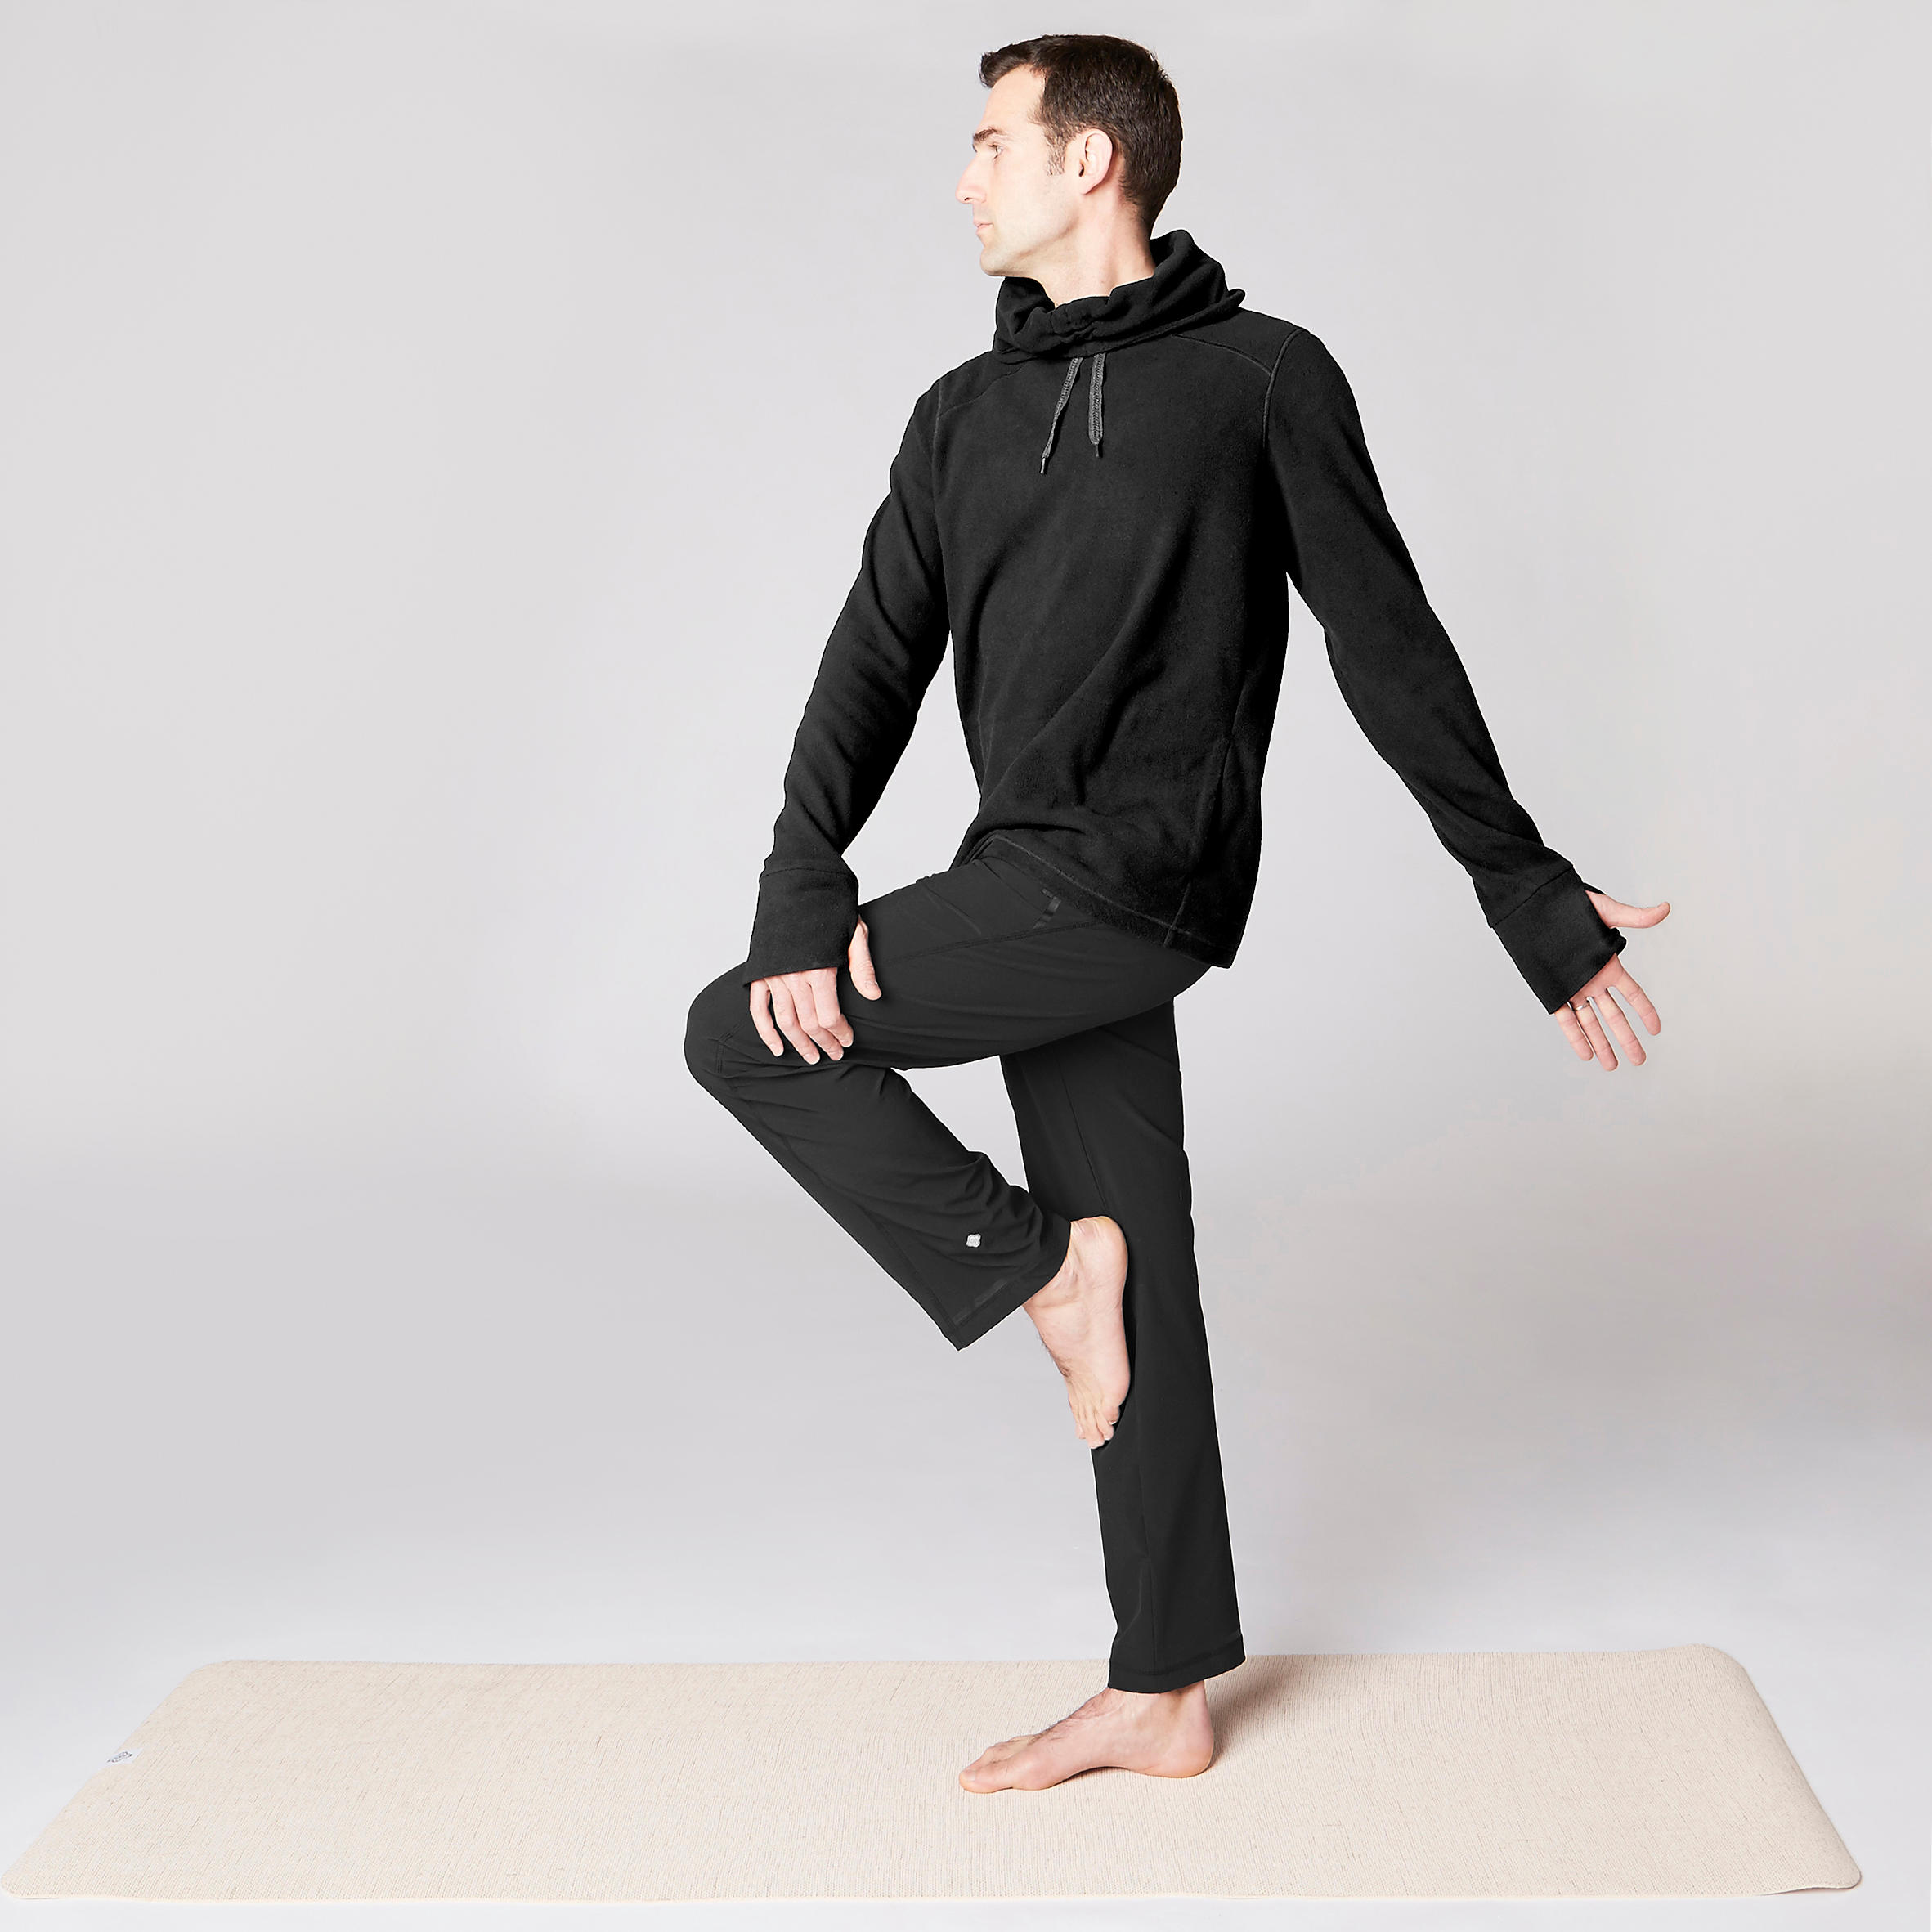 Men's Fleece Yoga Sweatshirt - Black 8/8